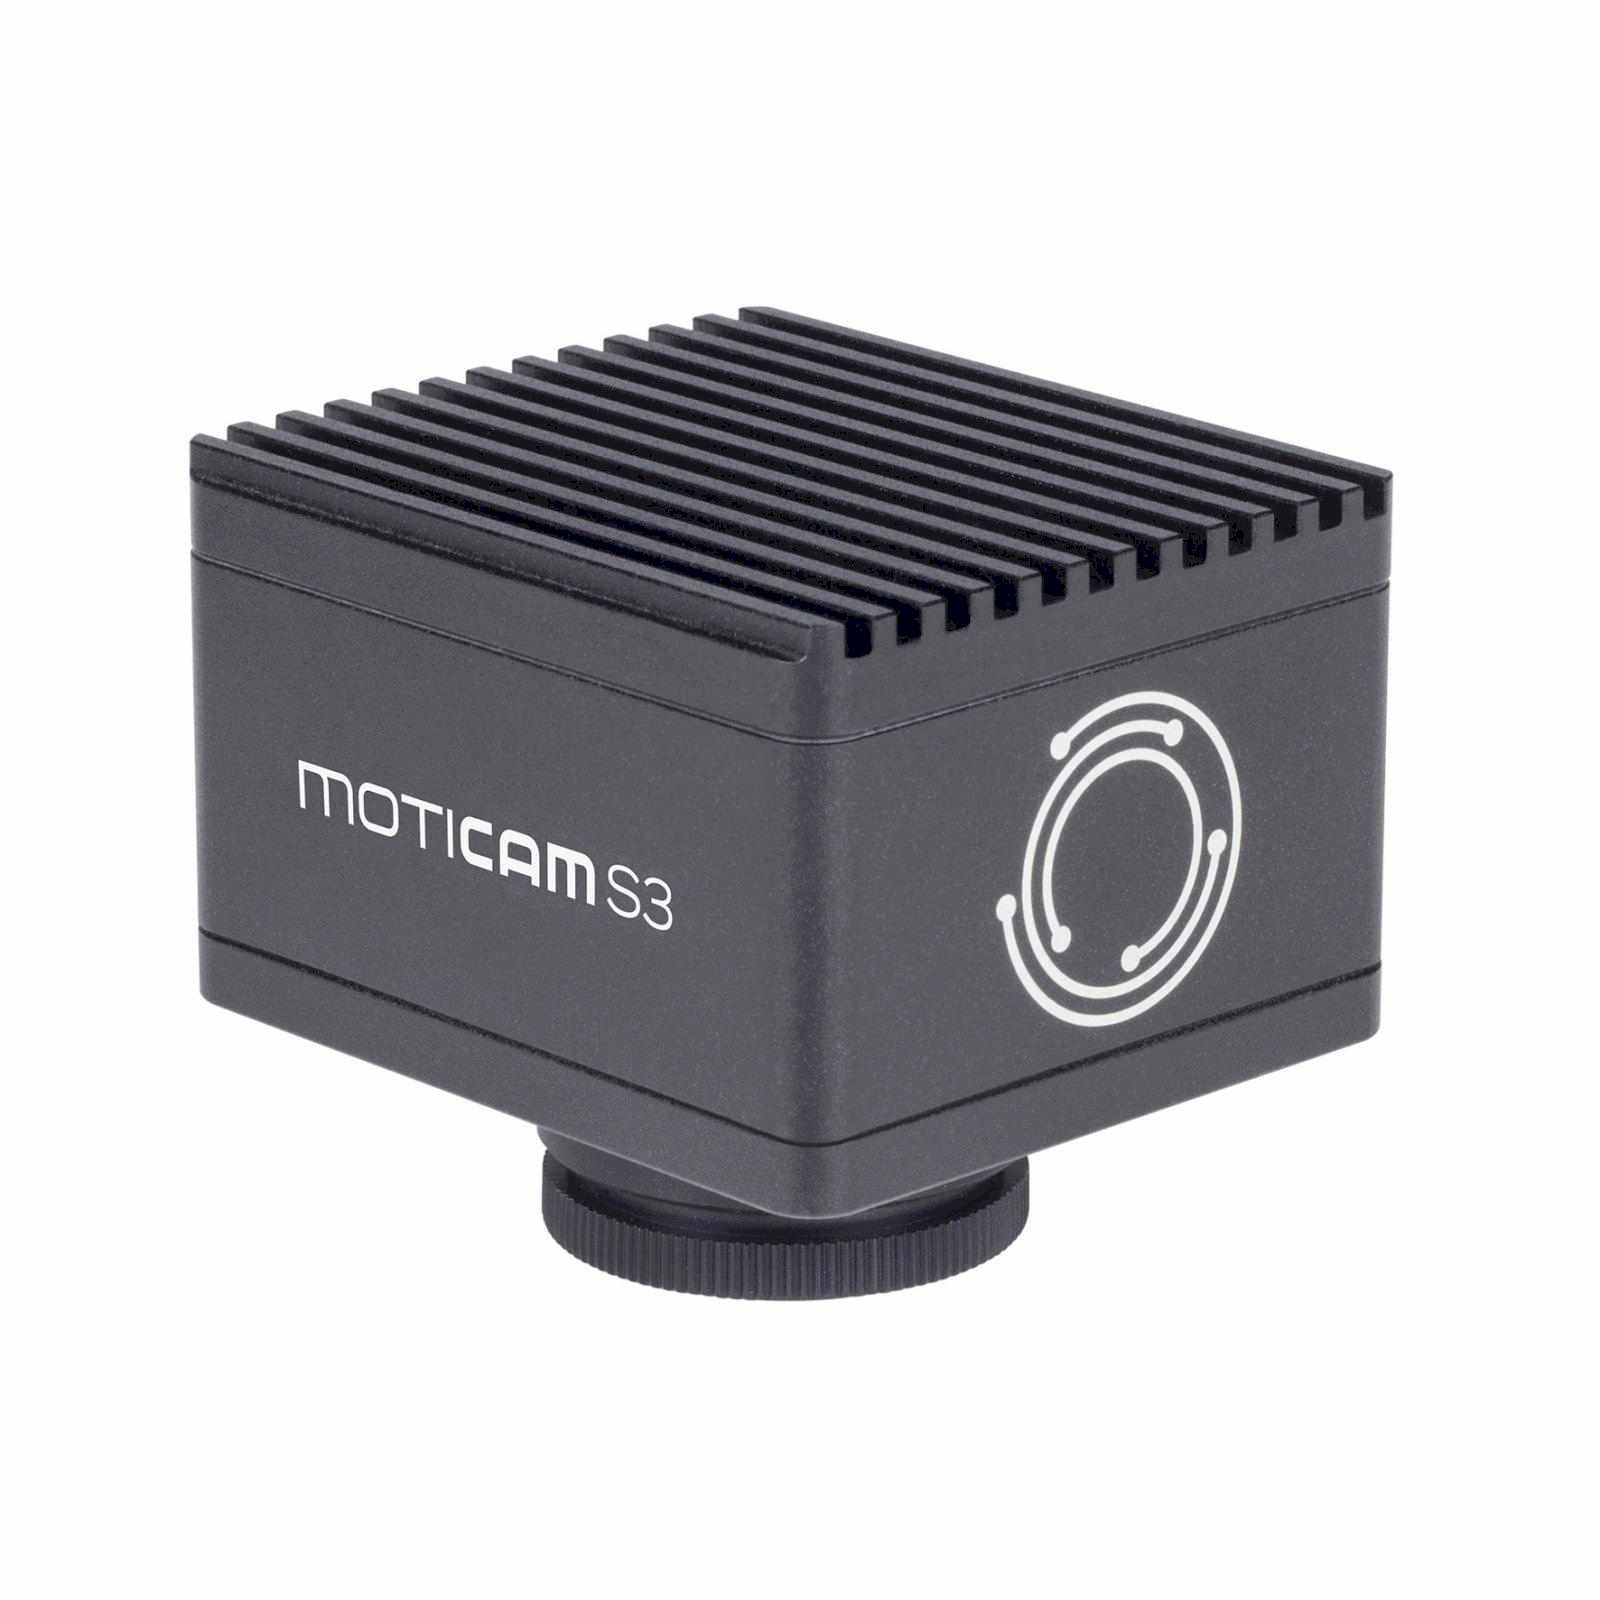 Videocamera Moticam S3